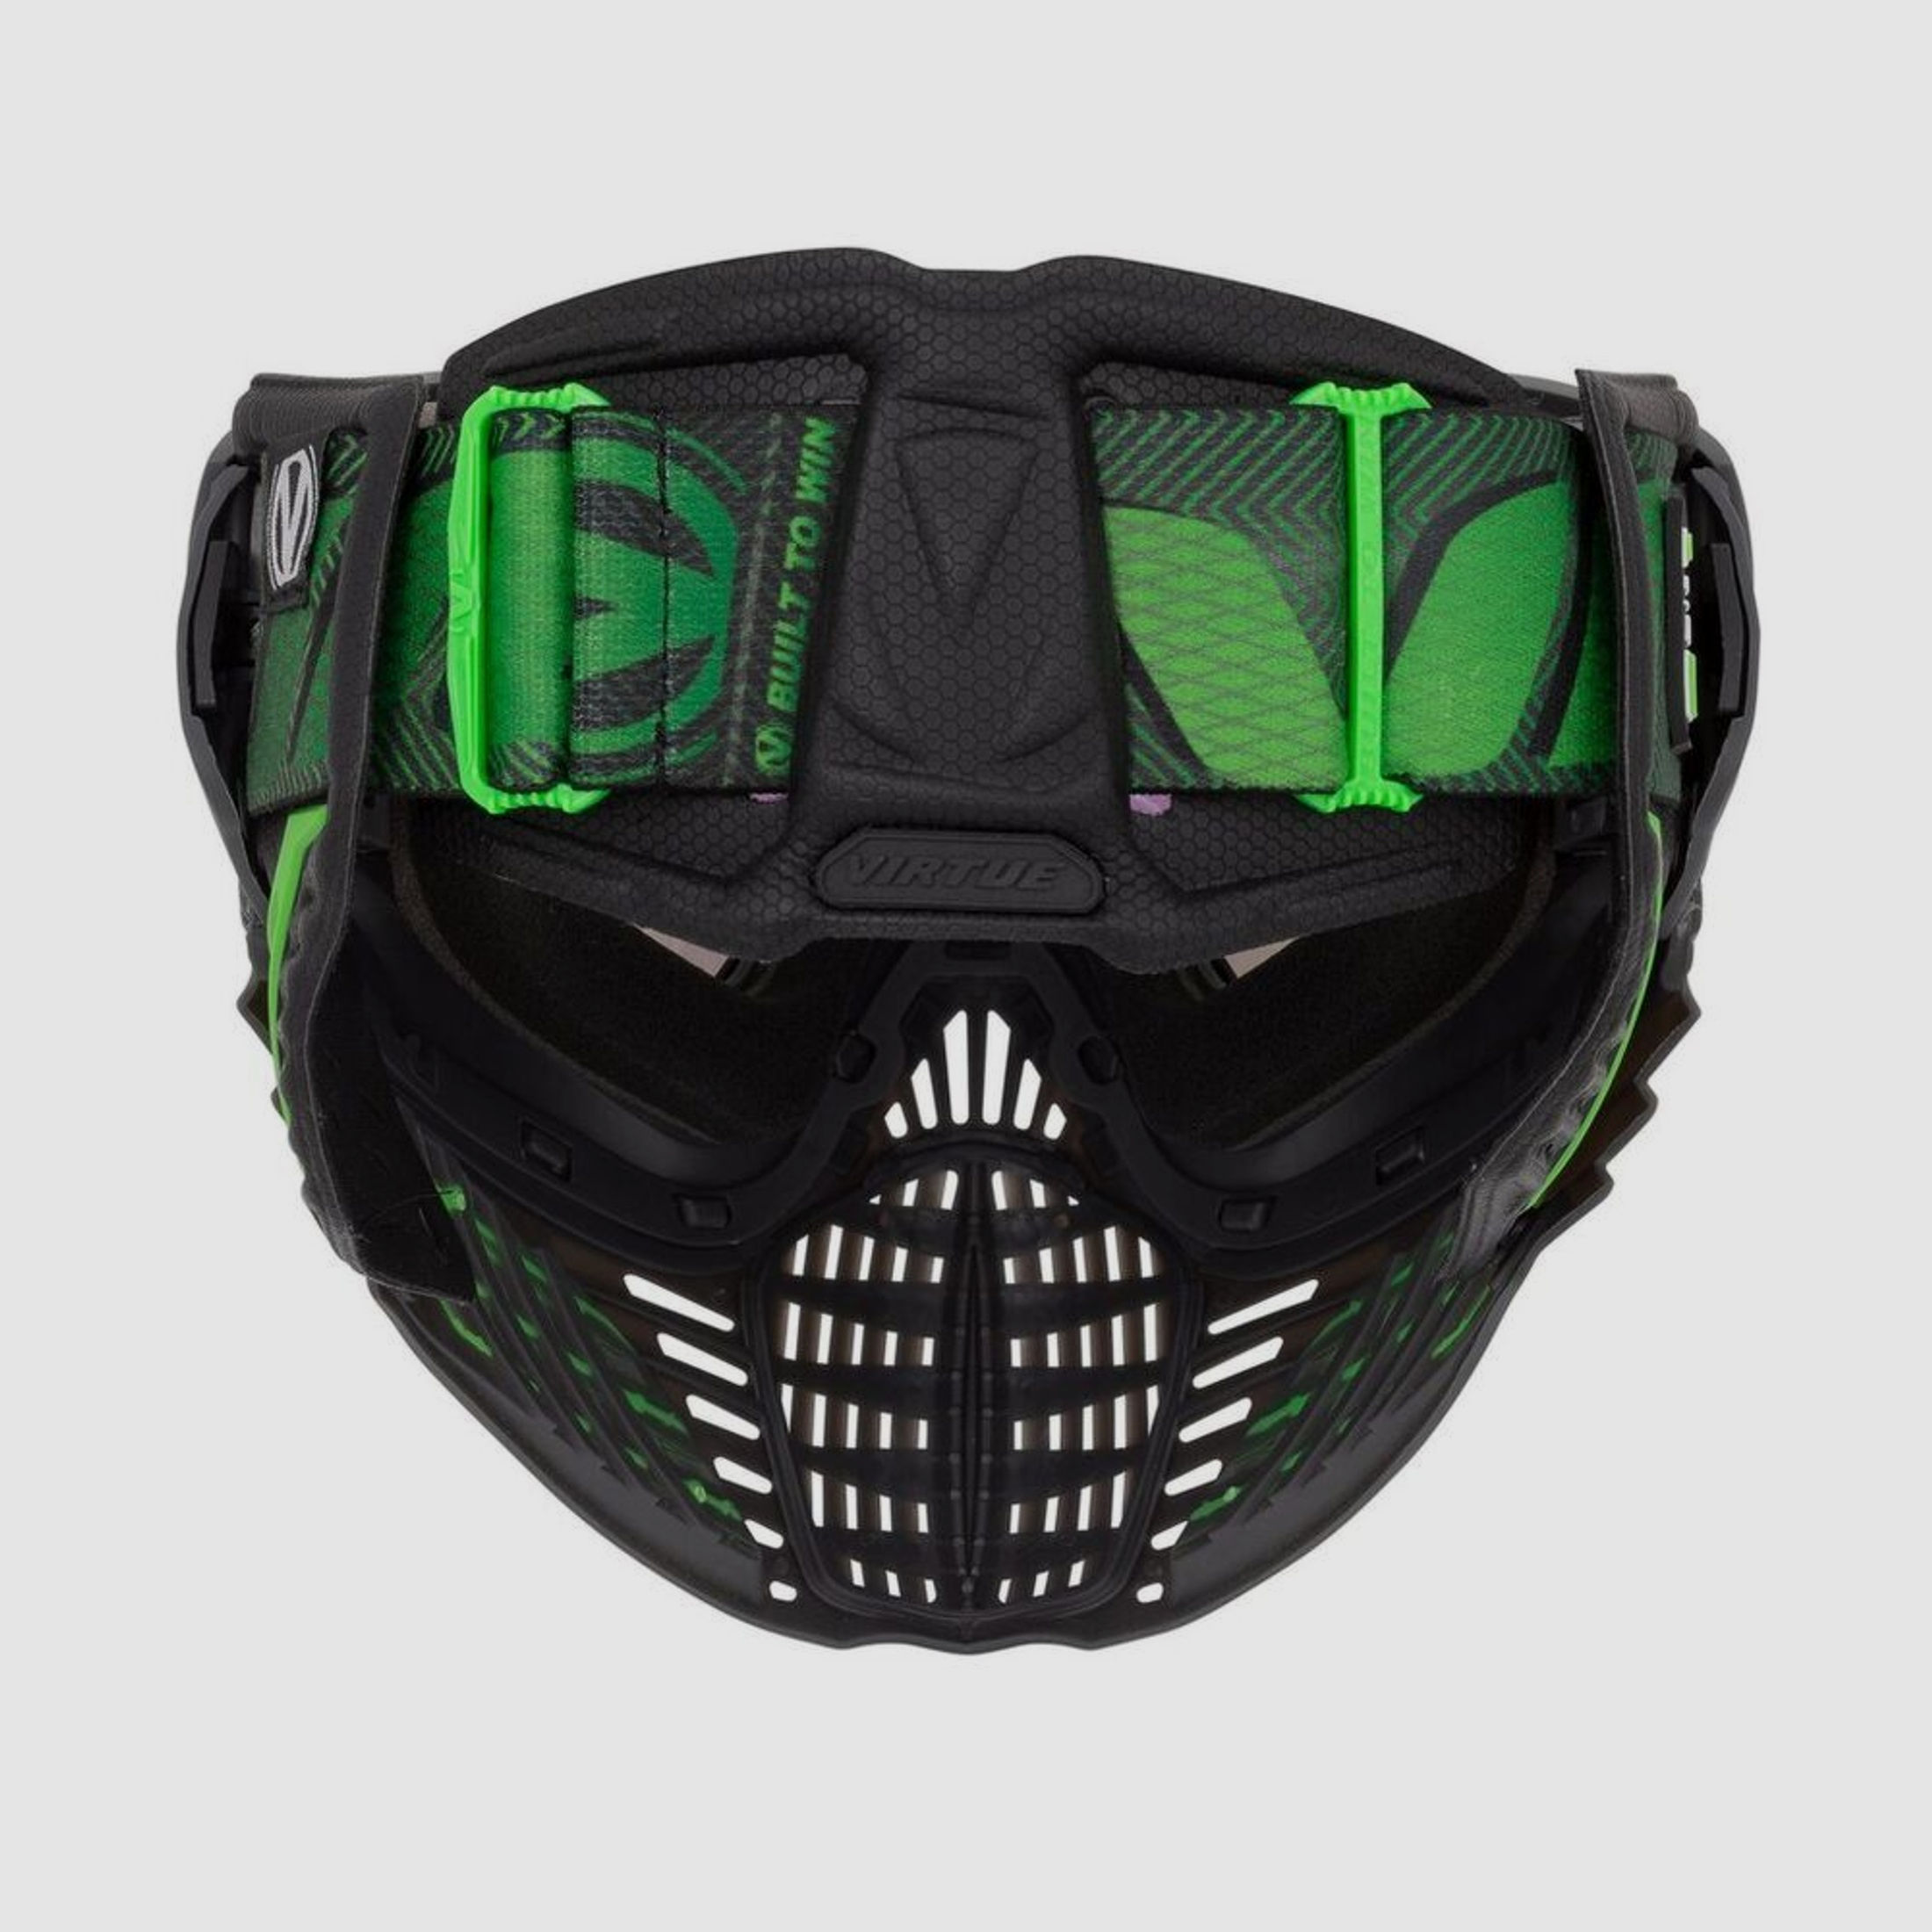 Virtue VIO Contoure II-Black Thermal Maske Paintball/Airsoft